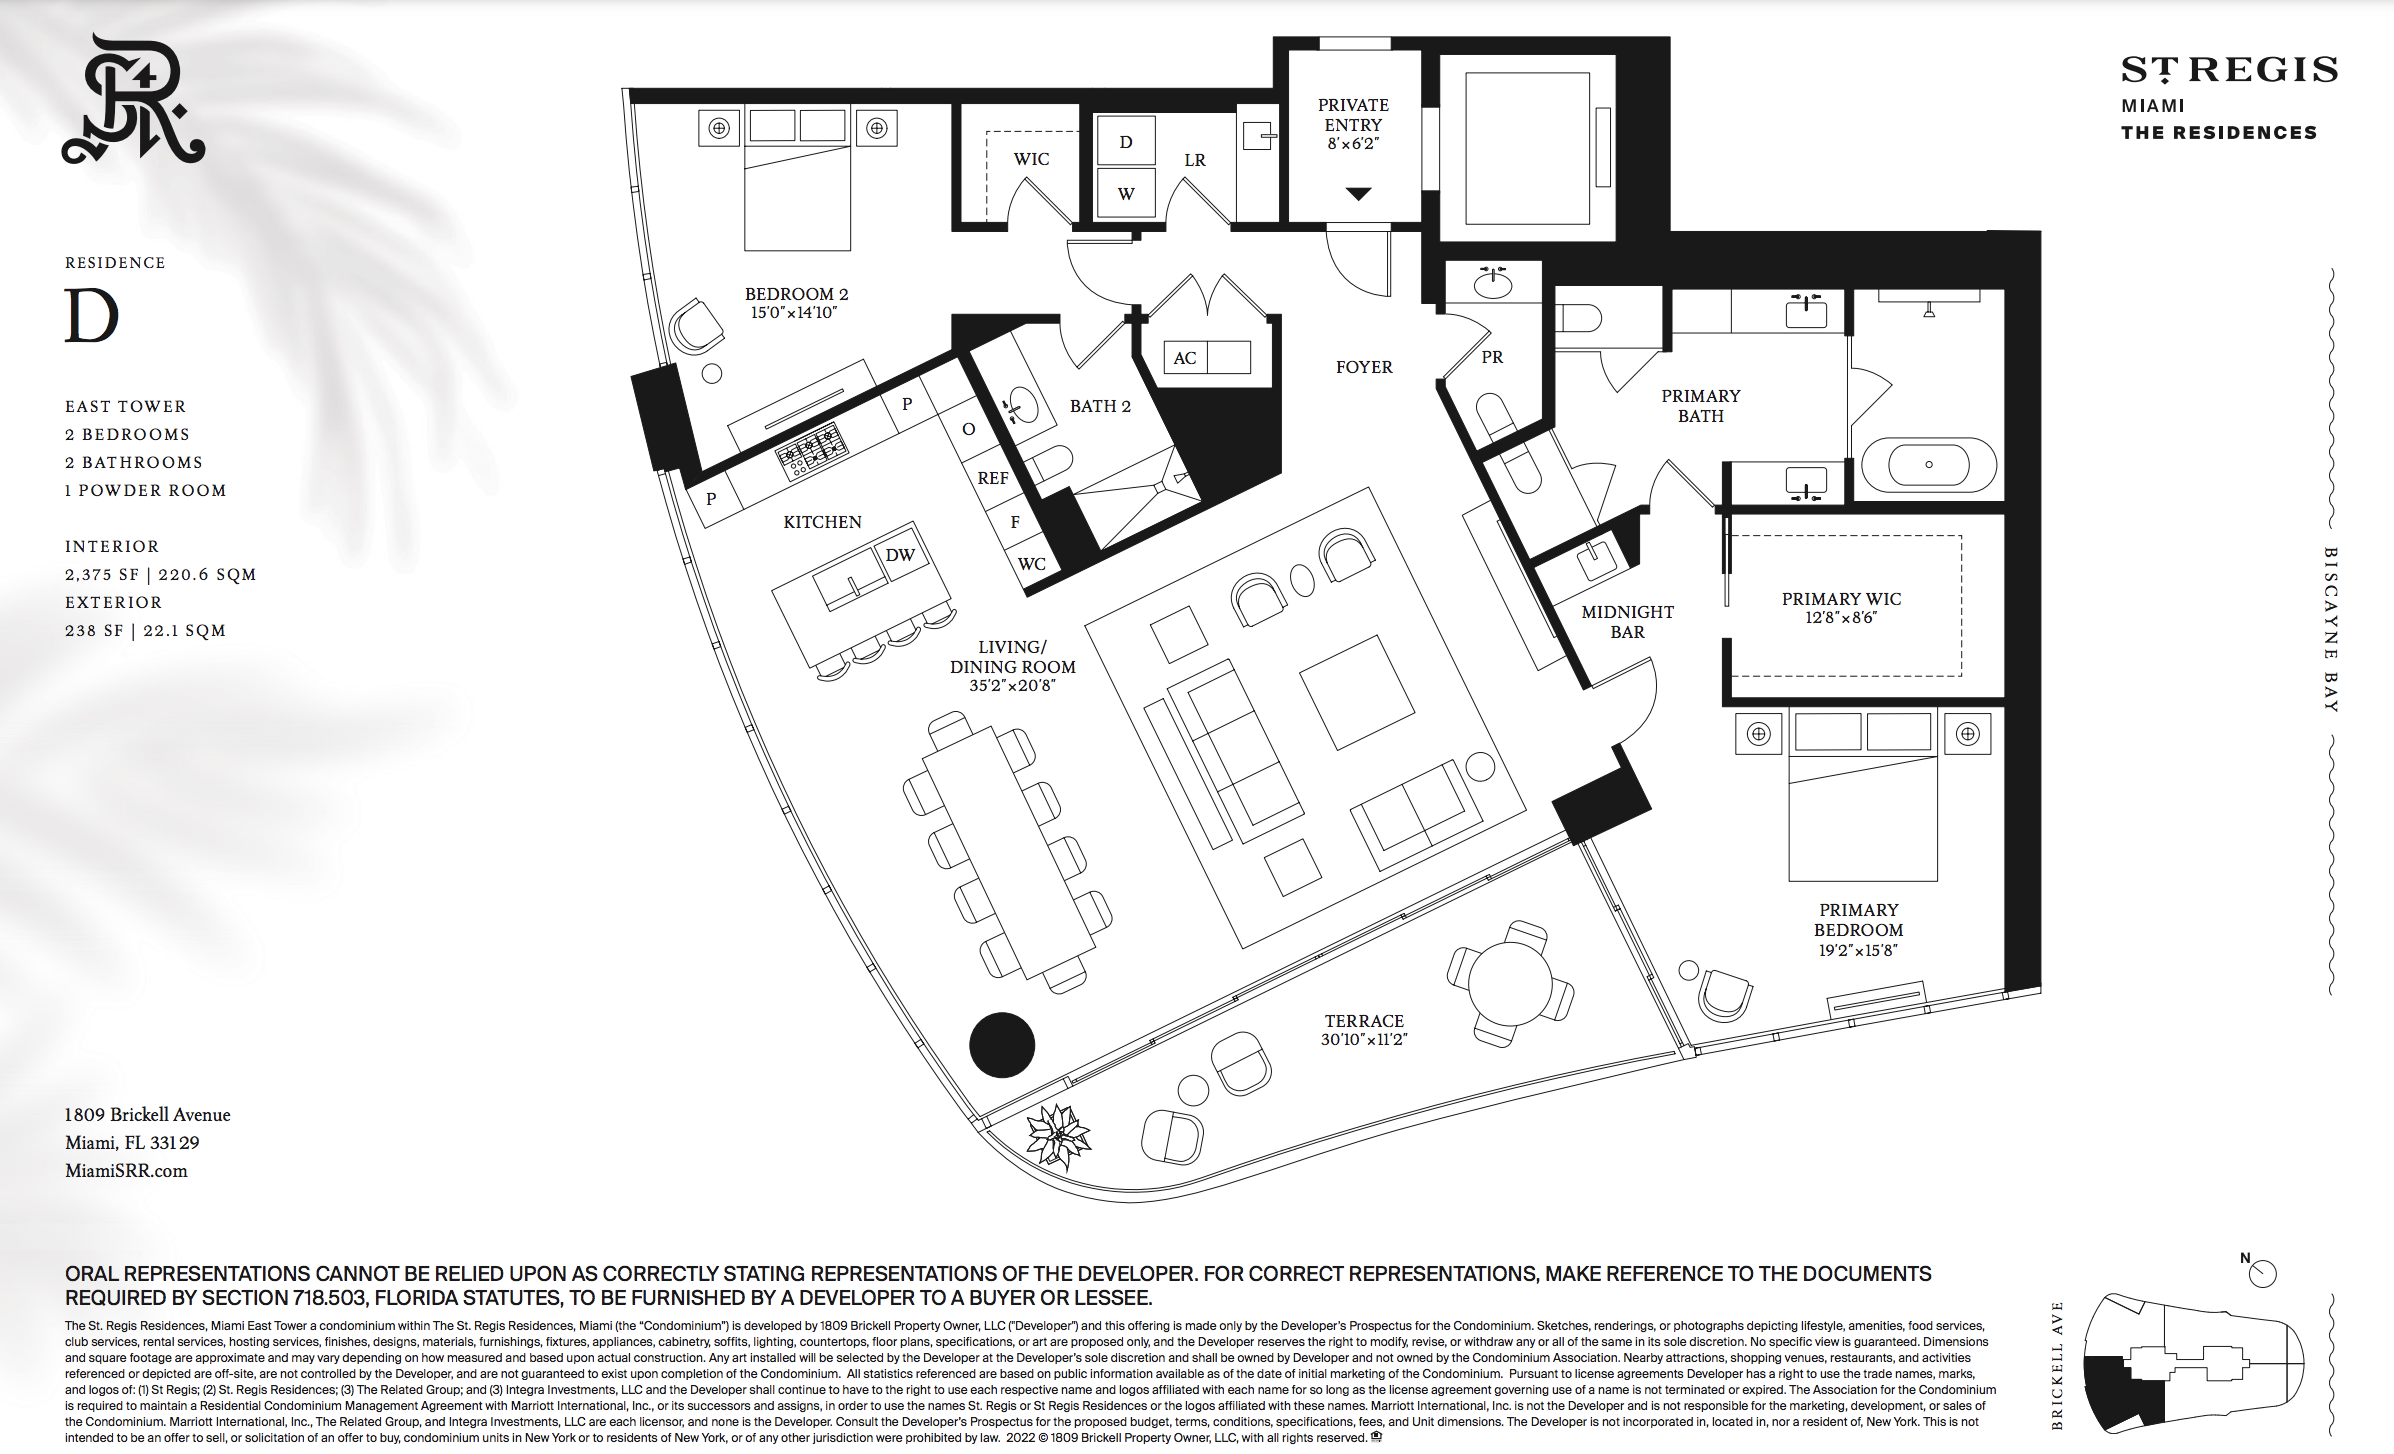 St Regis Brickell The C-Line. 3 Bedrooms | 3.5 Bathrooms 2,728 Interior SF | 238 SF Exterior